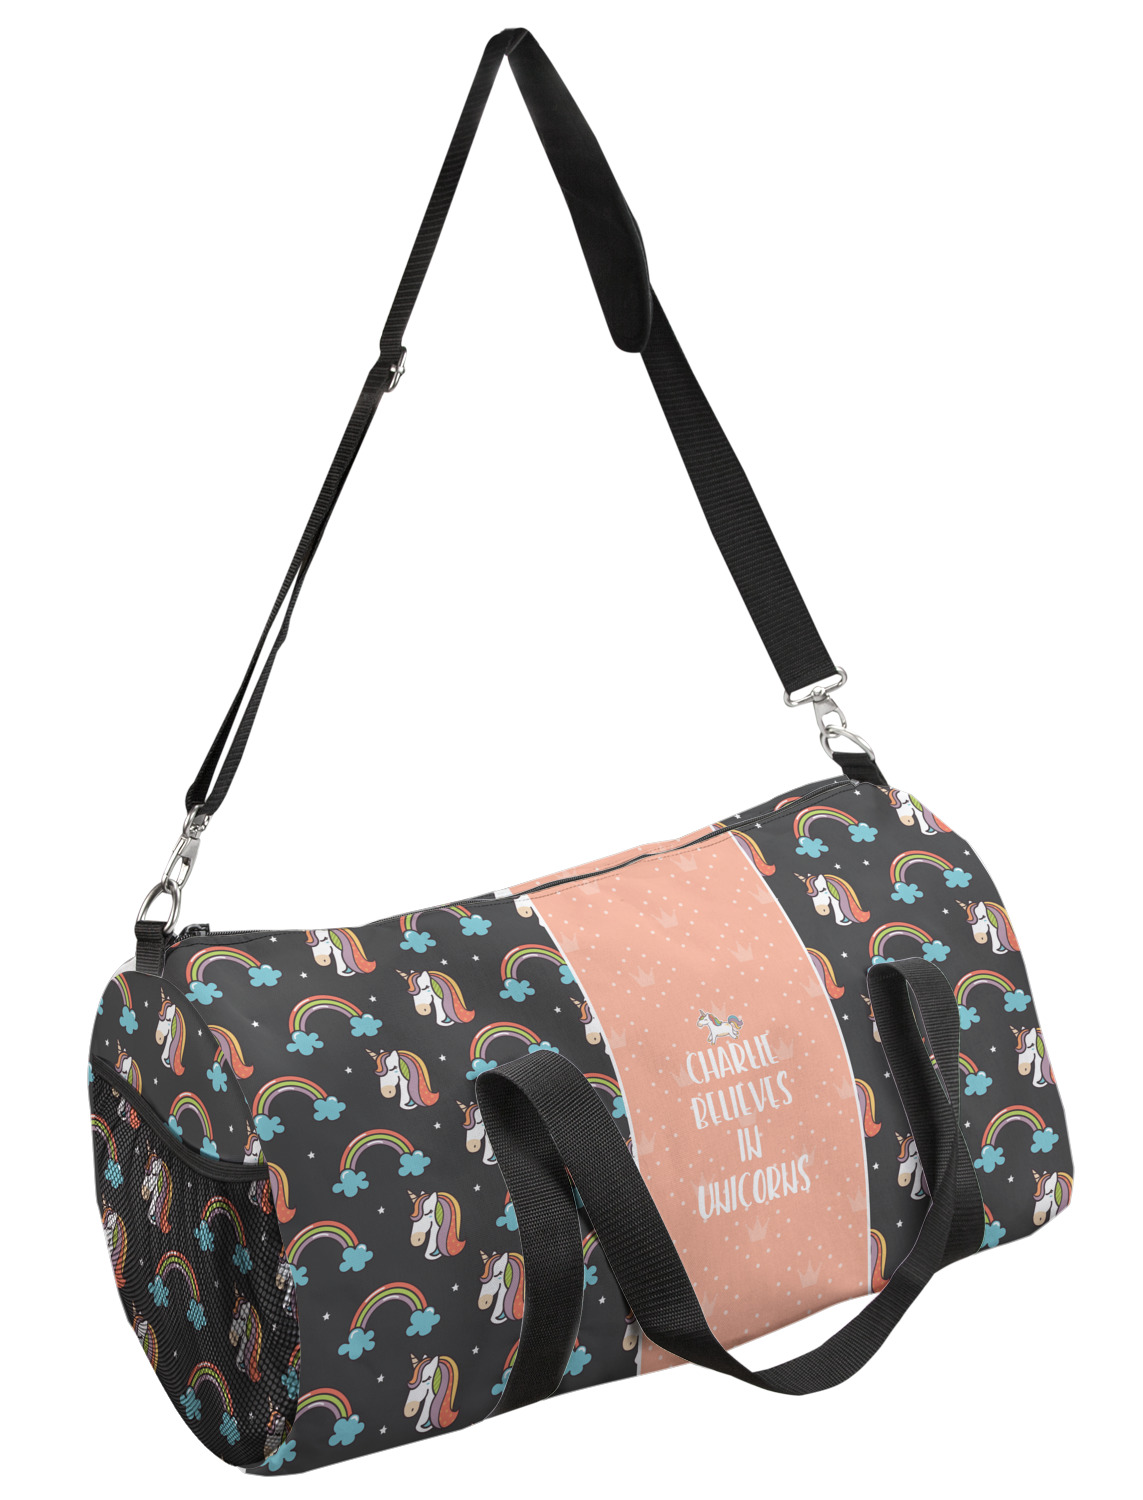 Unicorns Duffel Bag (Personalized) - YouCustomizeIt